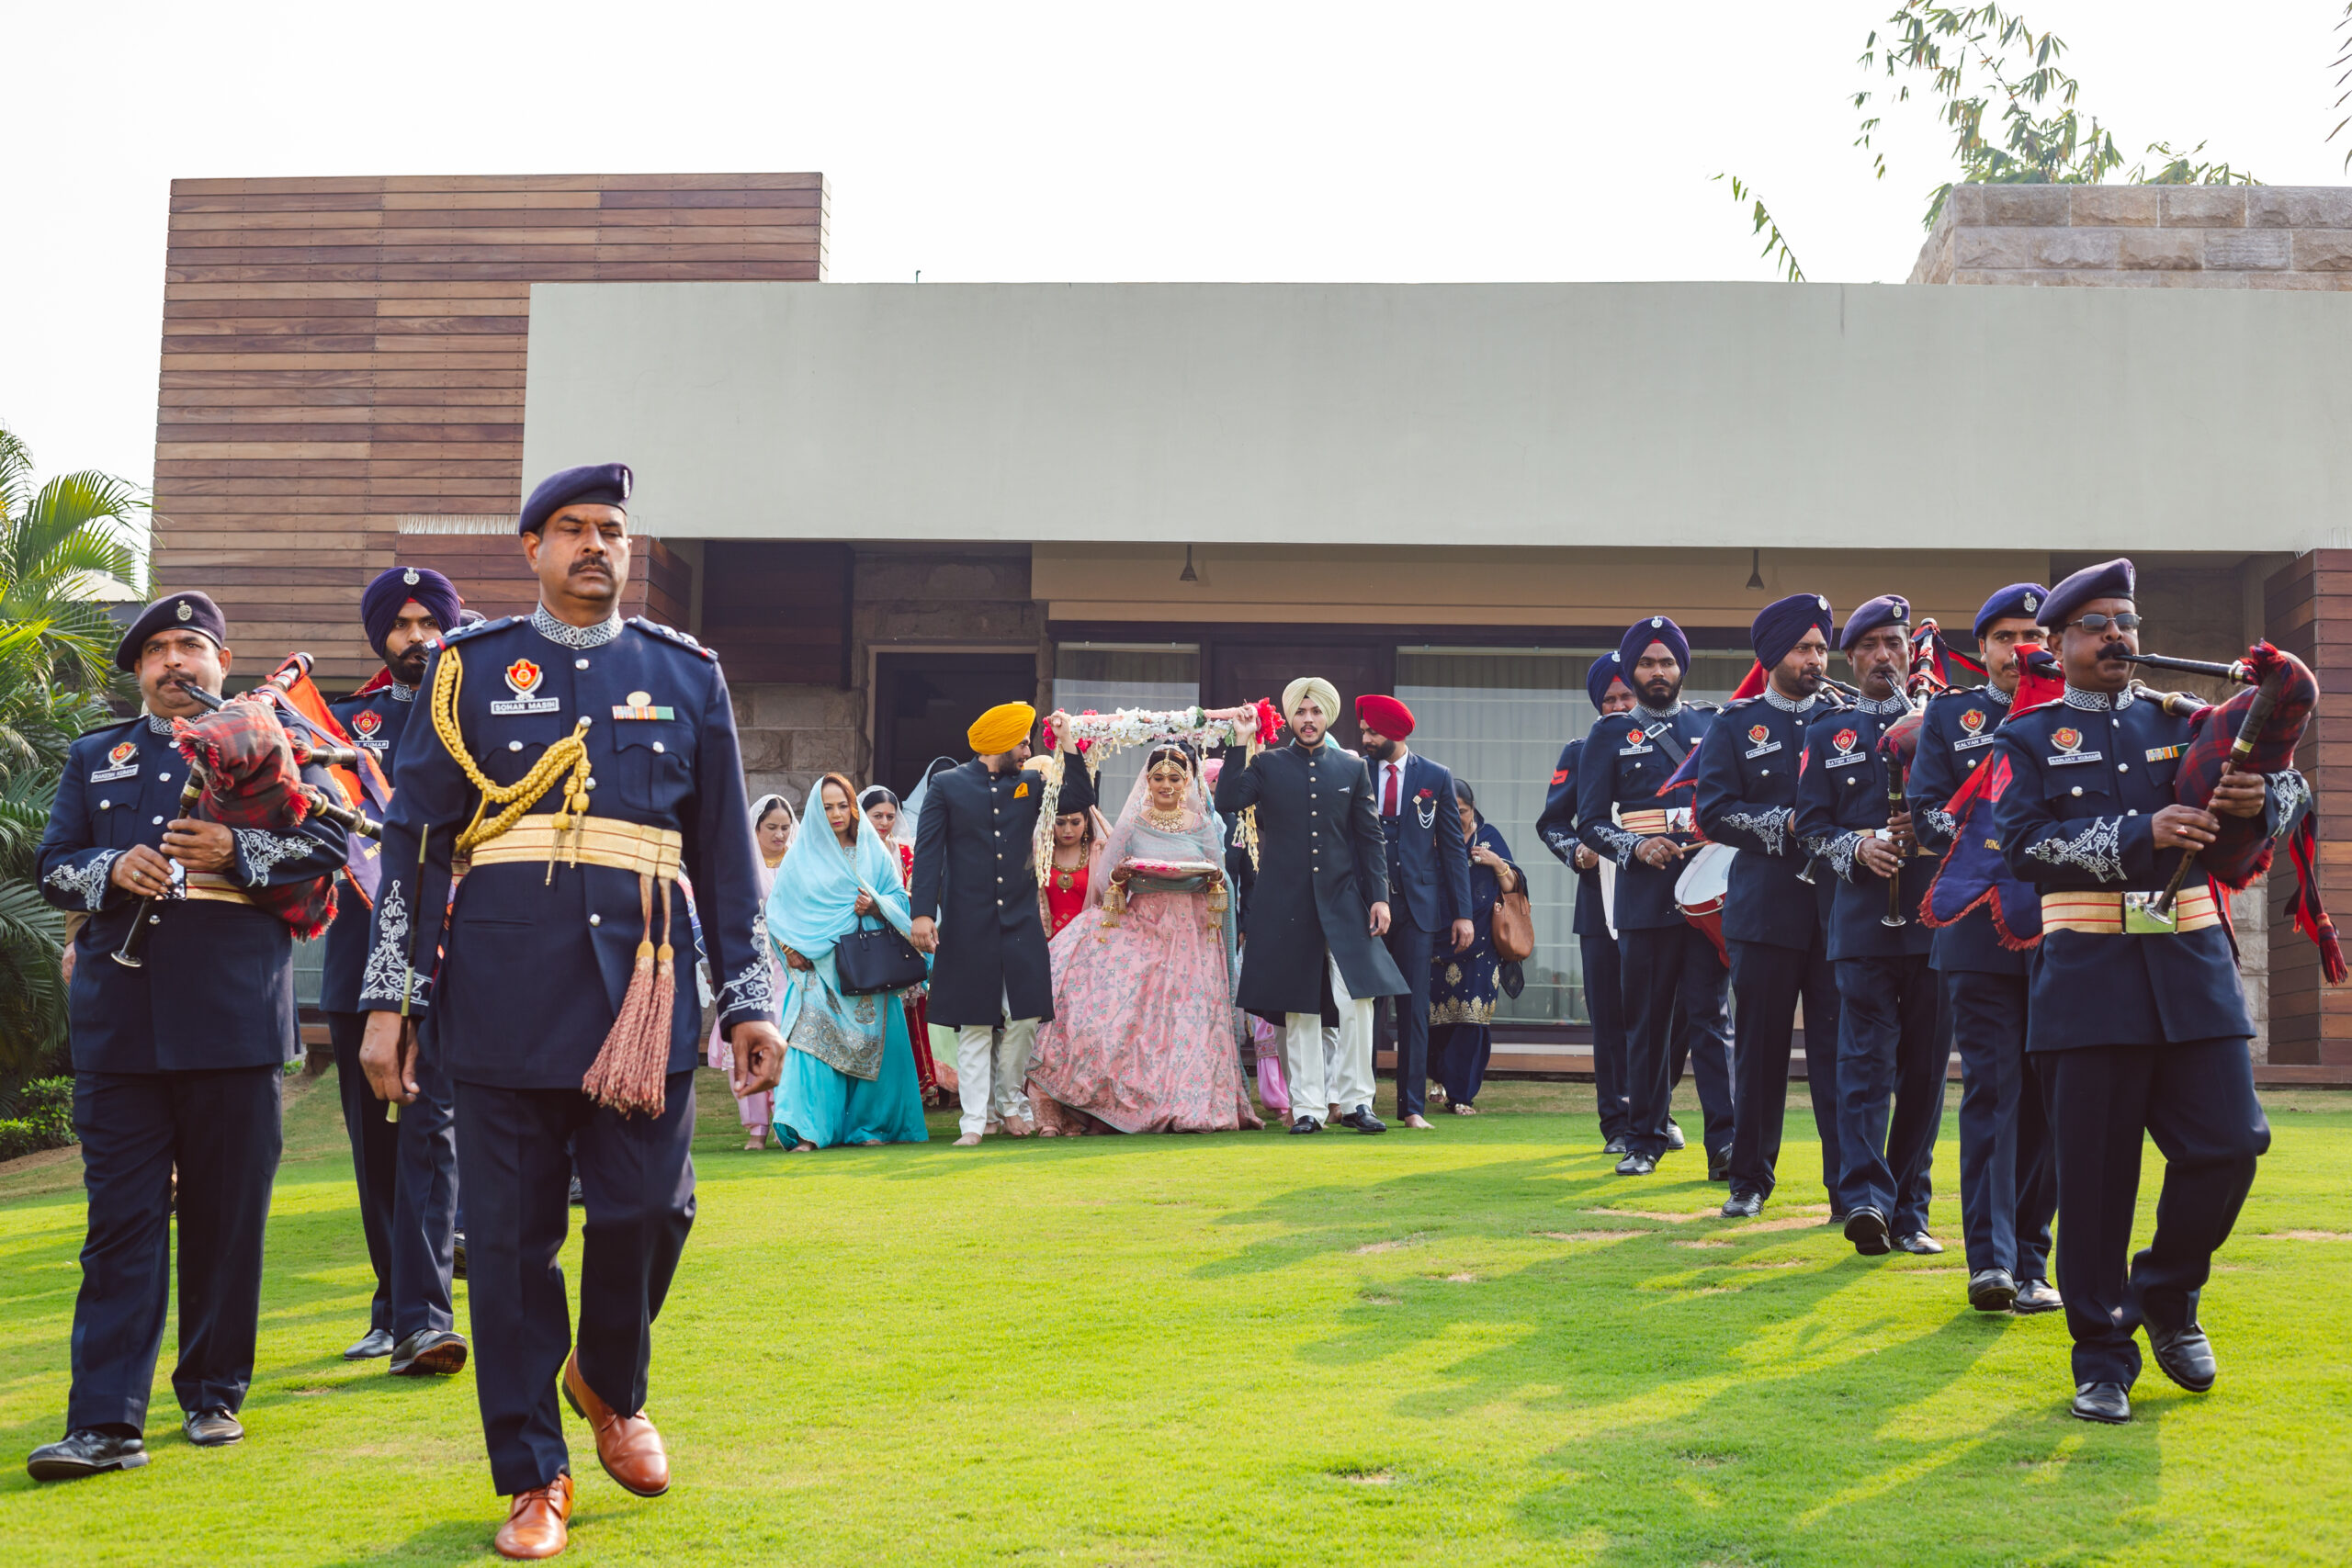 Trending Indian Wedding Couple Poses Ideas For Photoshoot